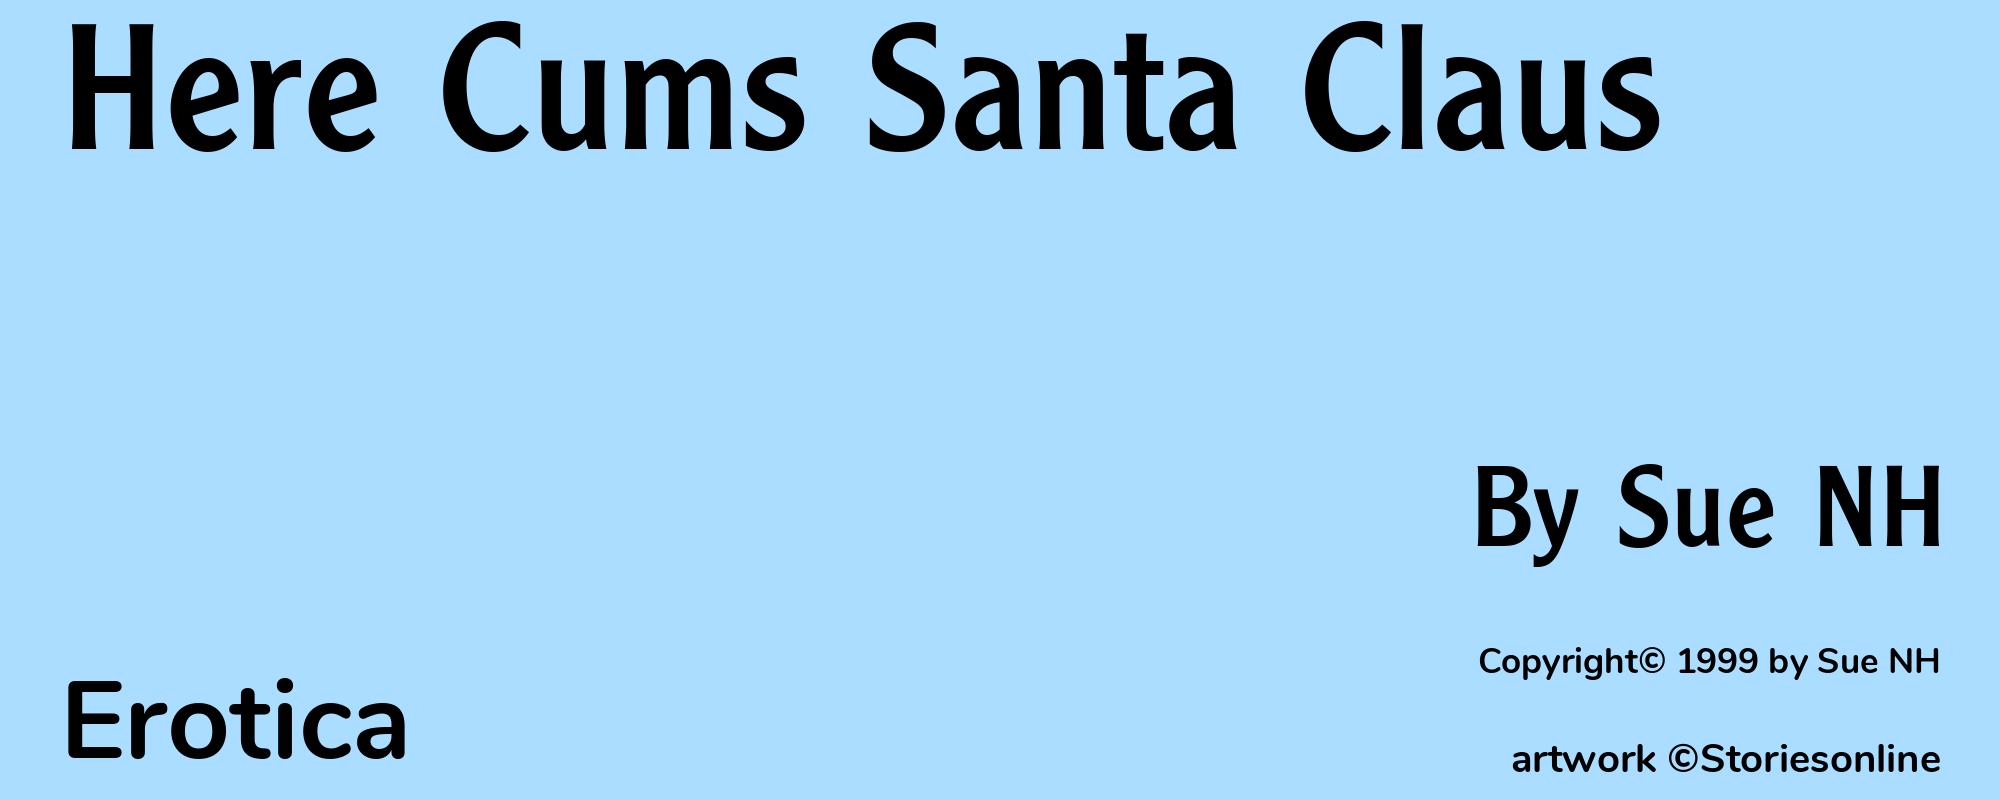 Here Cums Santa Claus - Cover